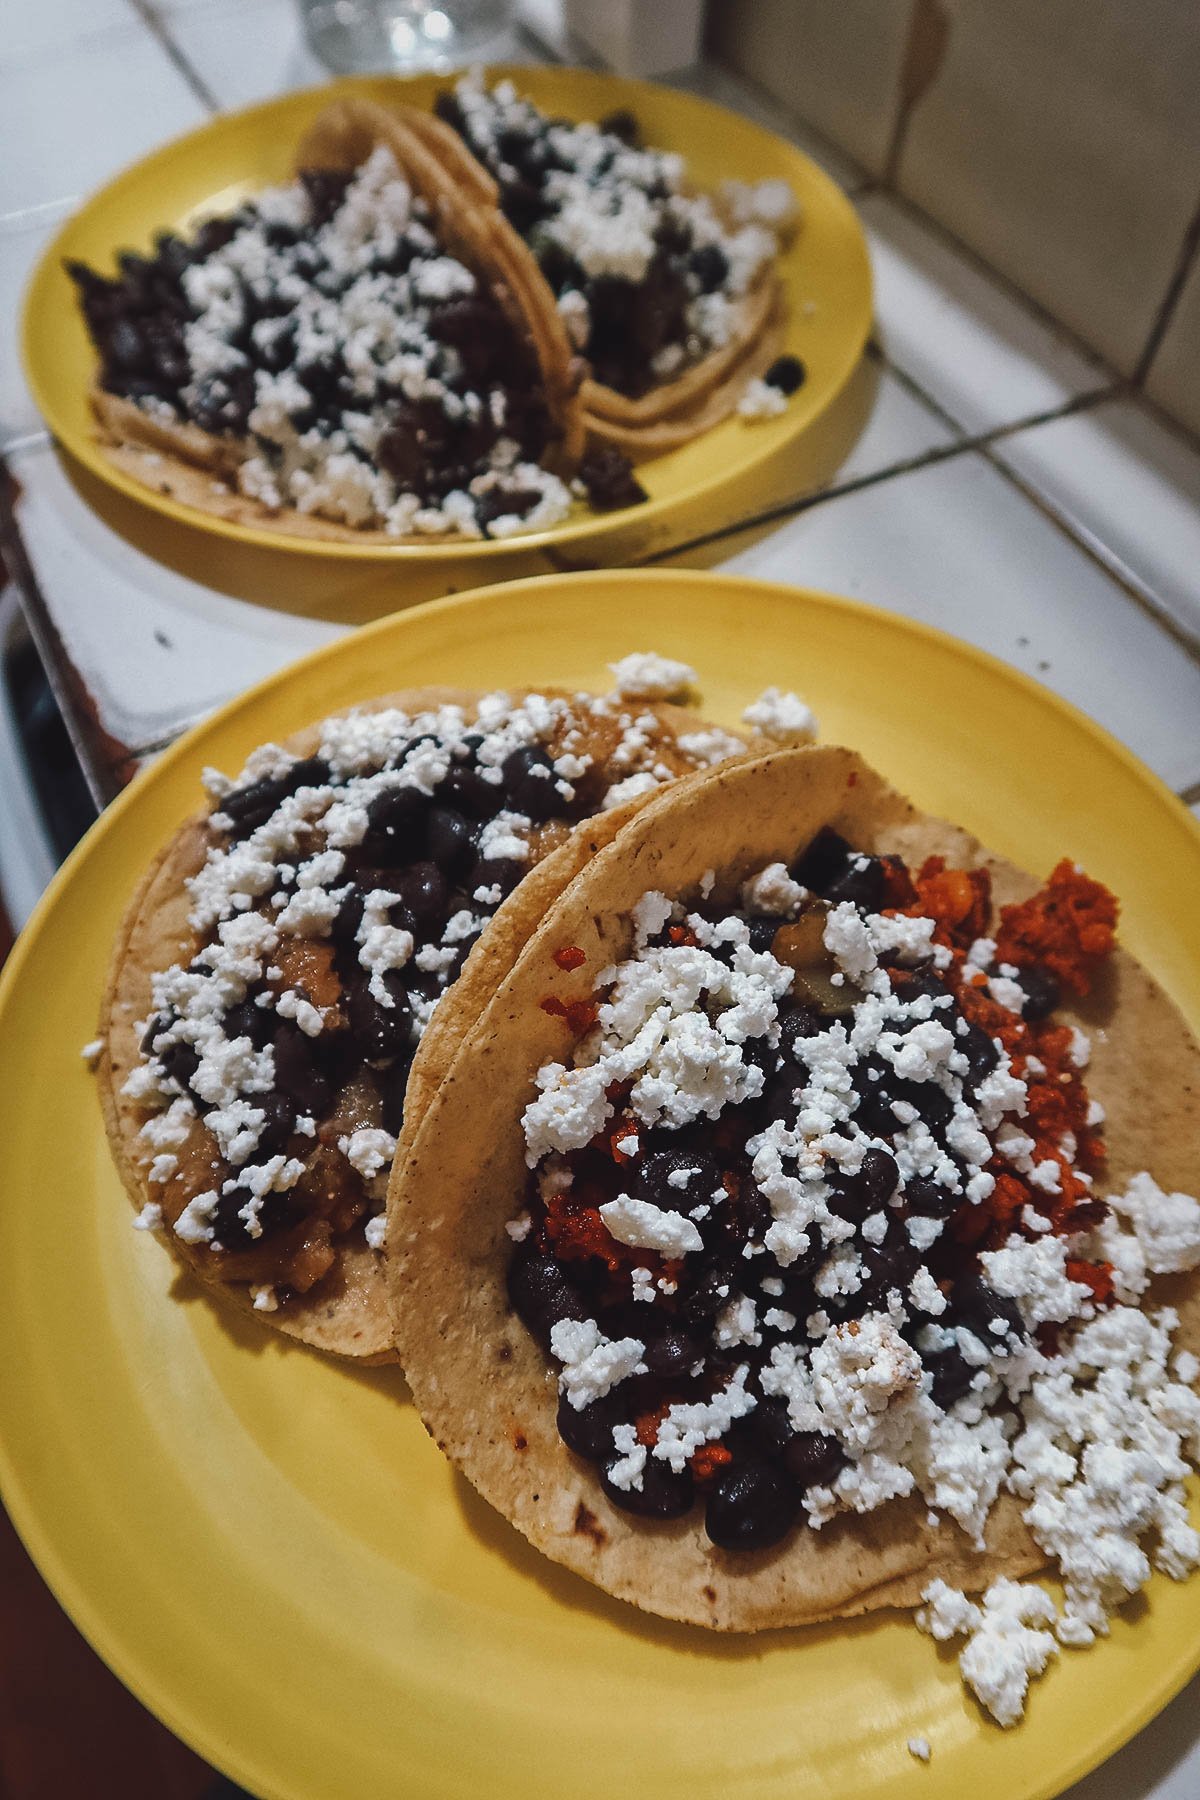 Tacos de guisado at a restaurant in Mexico City